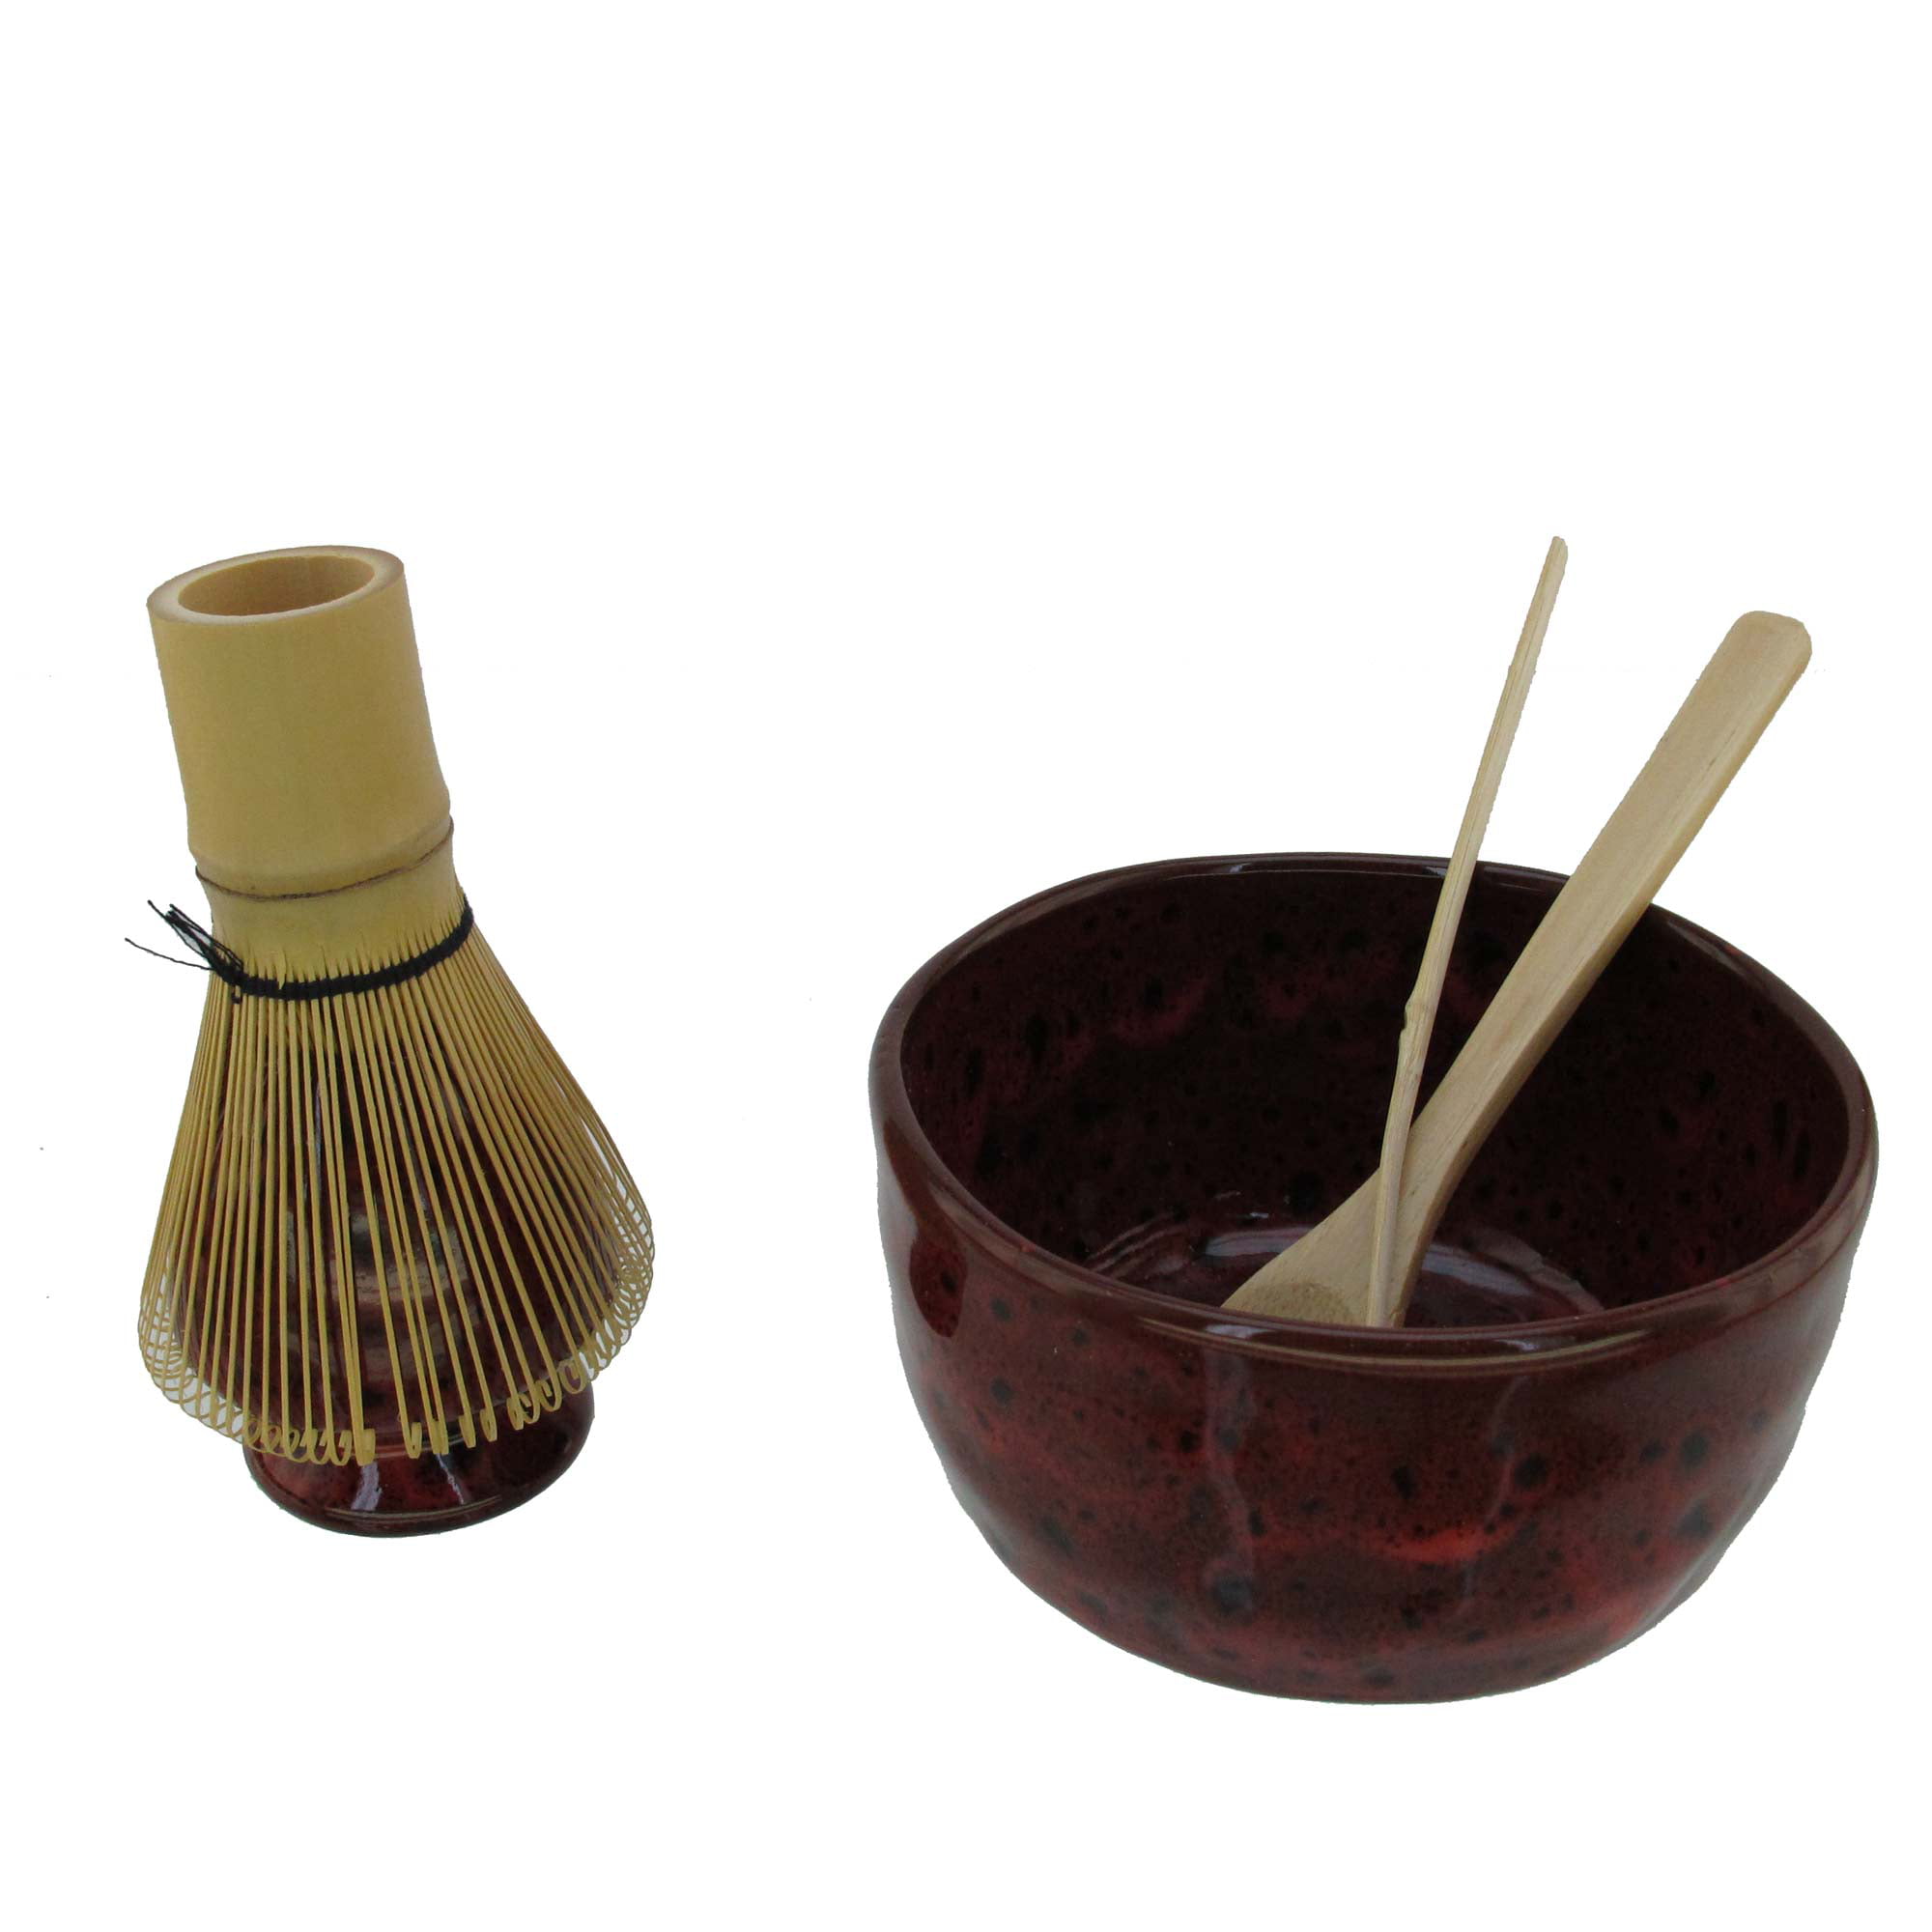 Matcha Ceremony Accessory in Gift Box /Holder/Bowl/Coffee Spoon/Teapot/Tray/Tea Towel Chashaku /Spoon 7pcs Greenf Premium Japanese Matcha Tea Set Chasen Whisk 